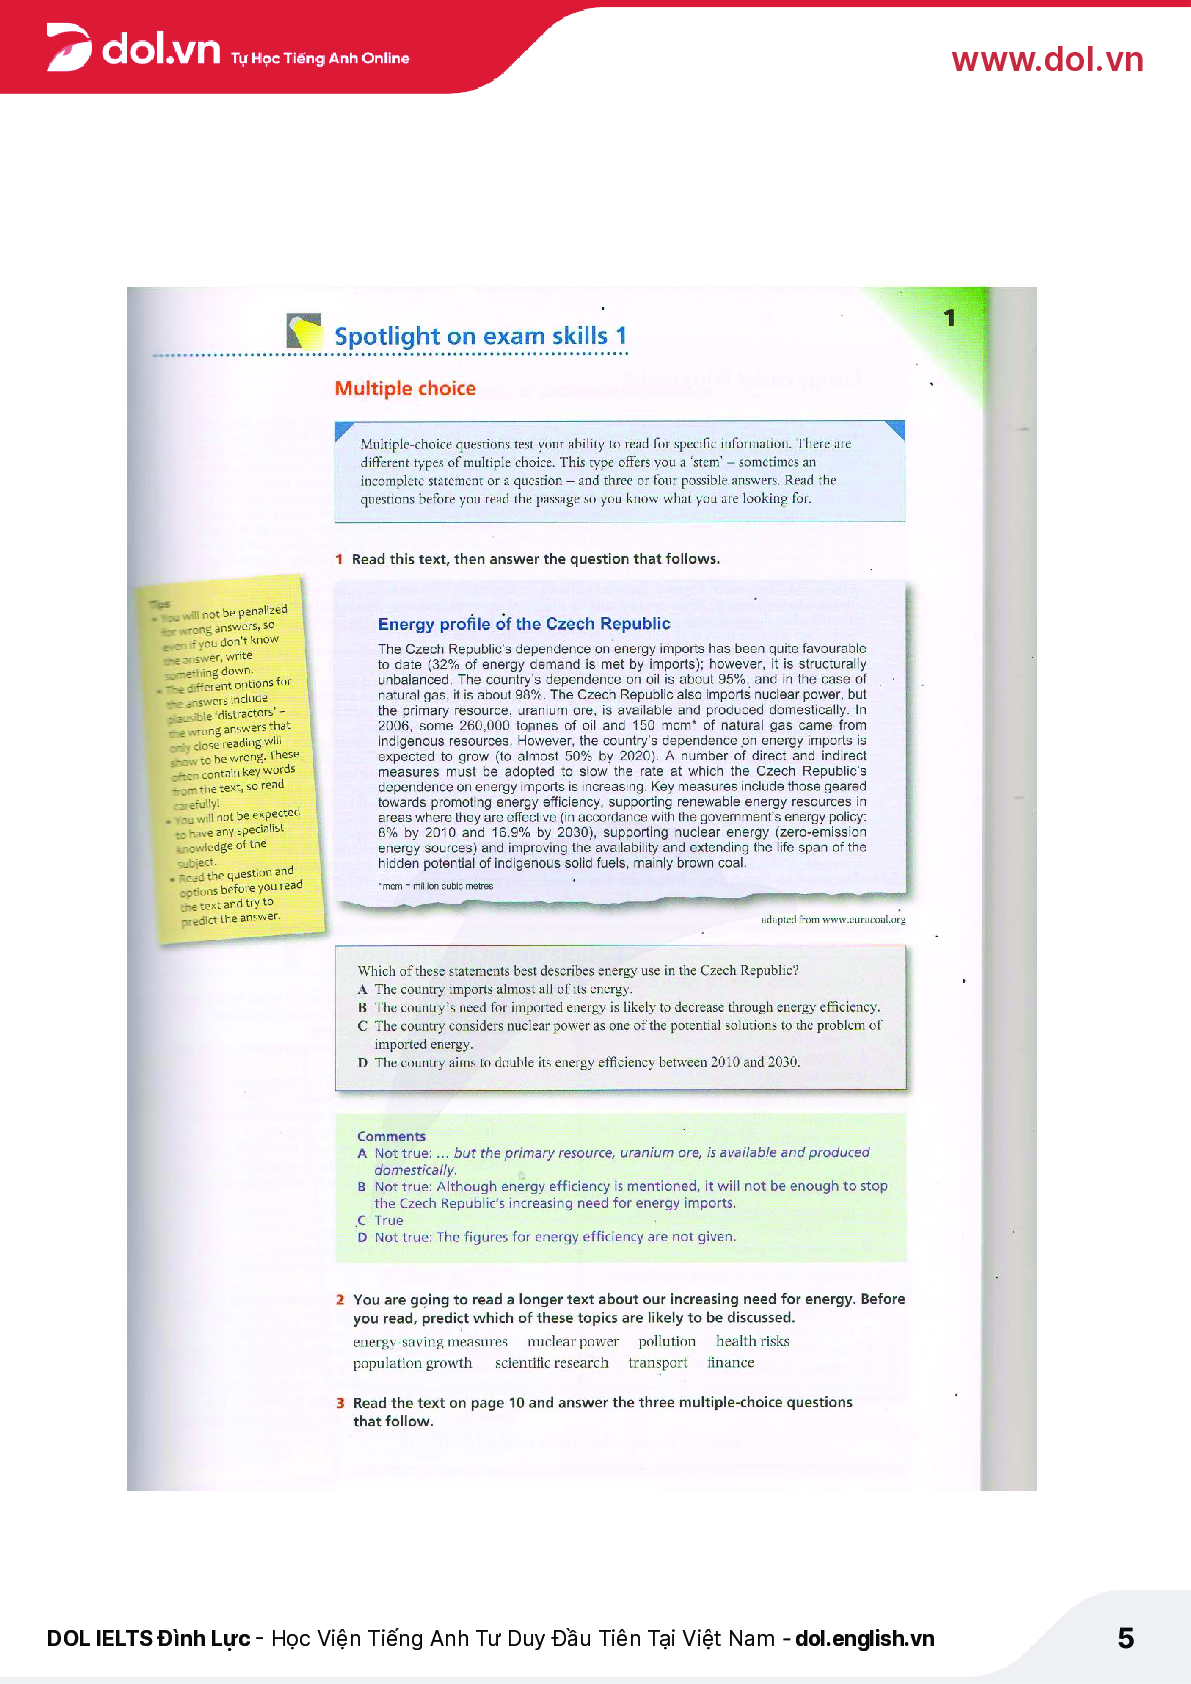 Sách IELTS Advantage Reading Skills pdf | Xem online, tải PDF miễn phí (trang 5)